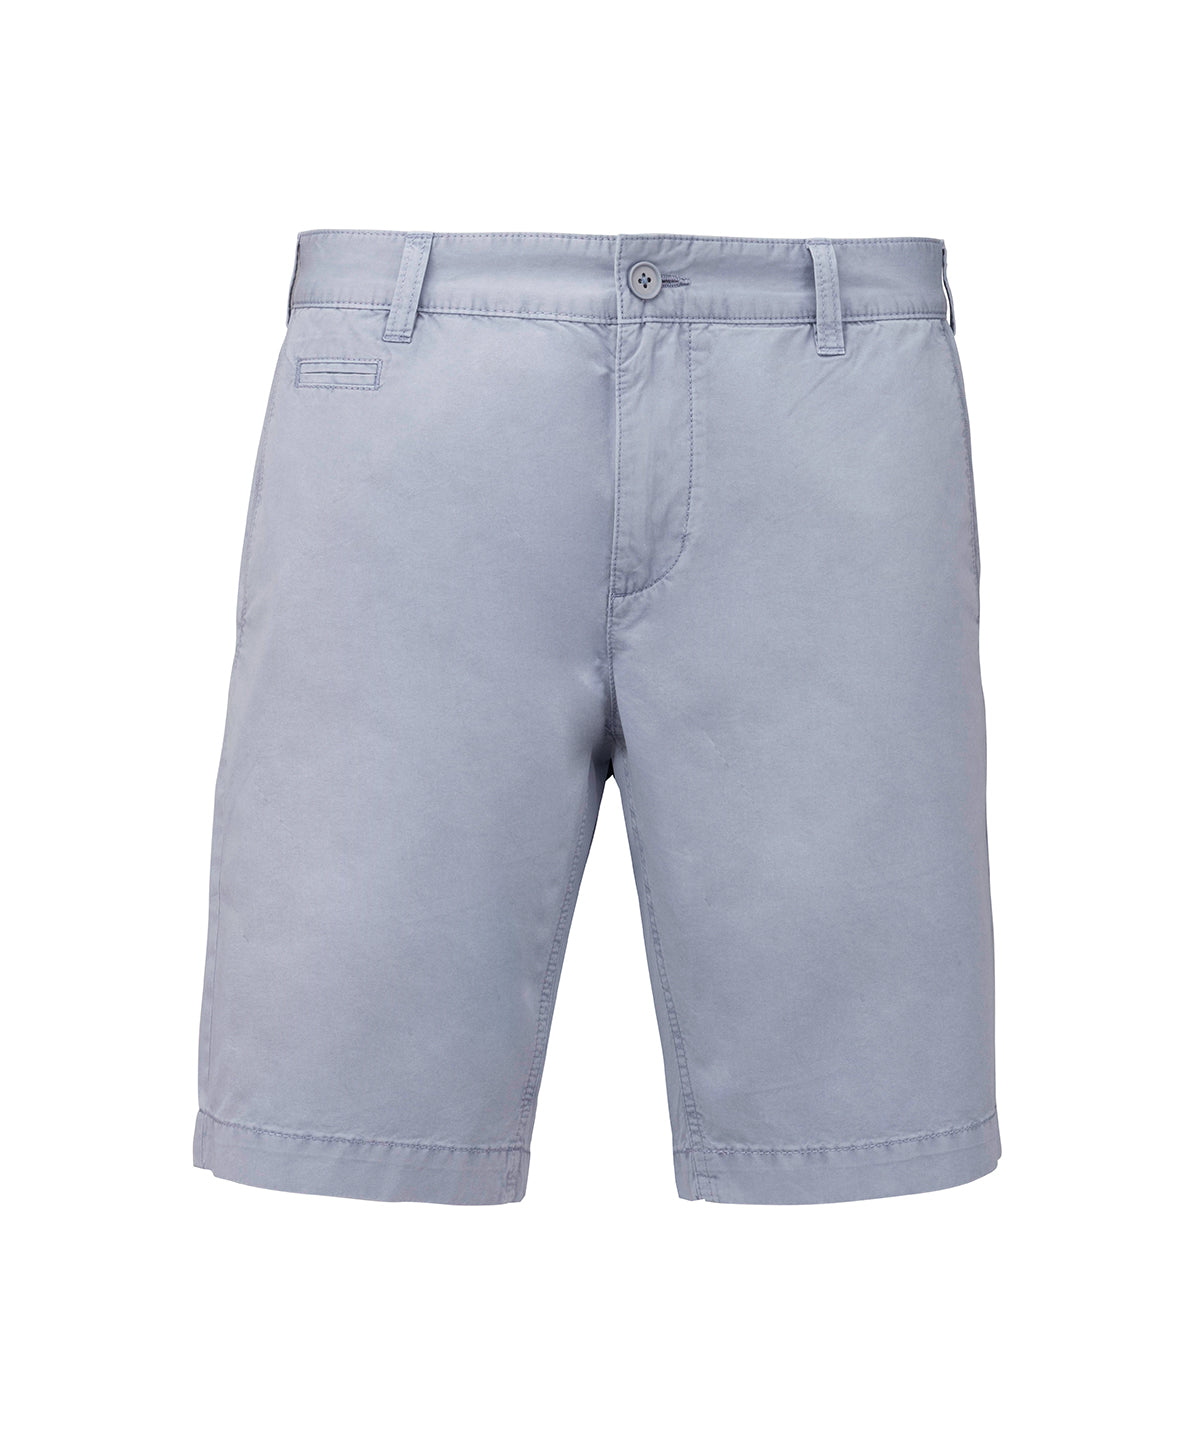 Men's Washed Effect Bermuda Shorts